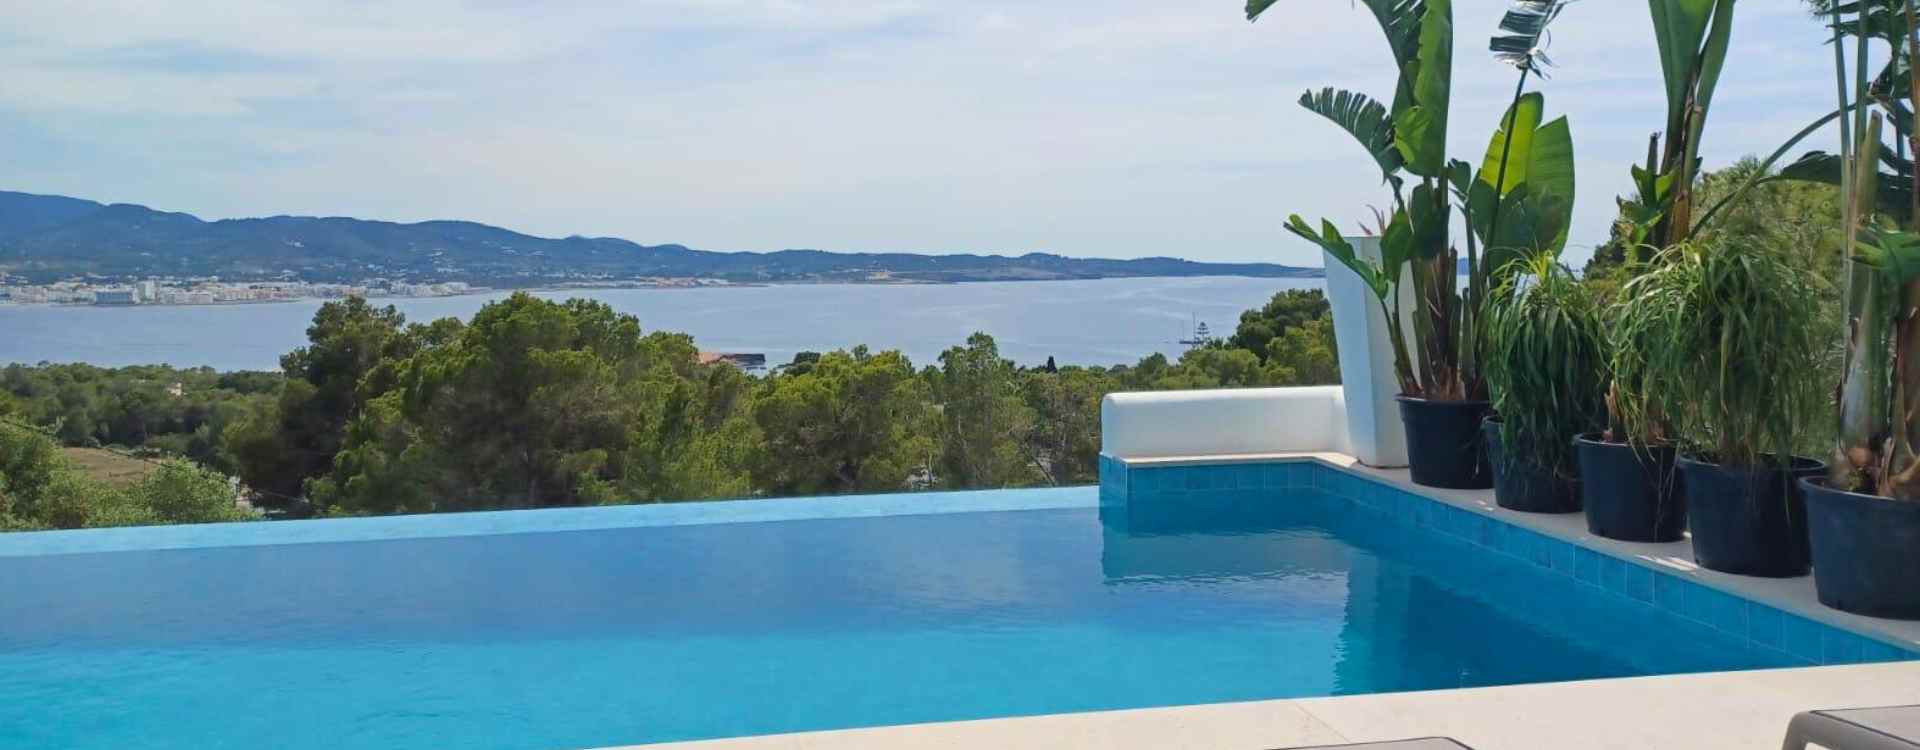 Villa Bedoin - Ibiza - Infinity pool 